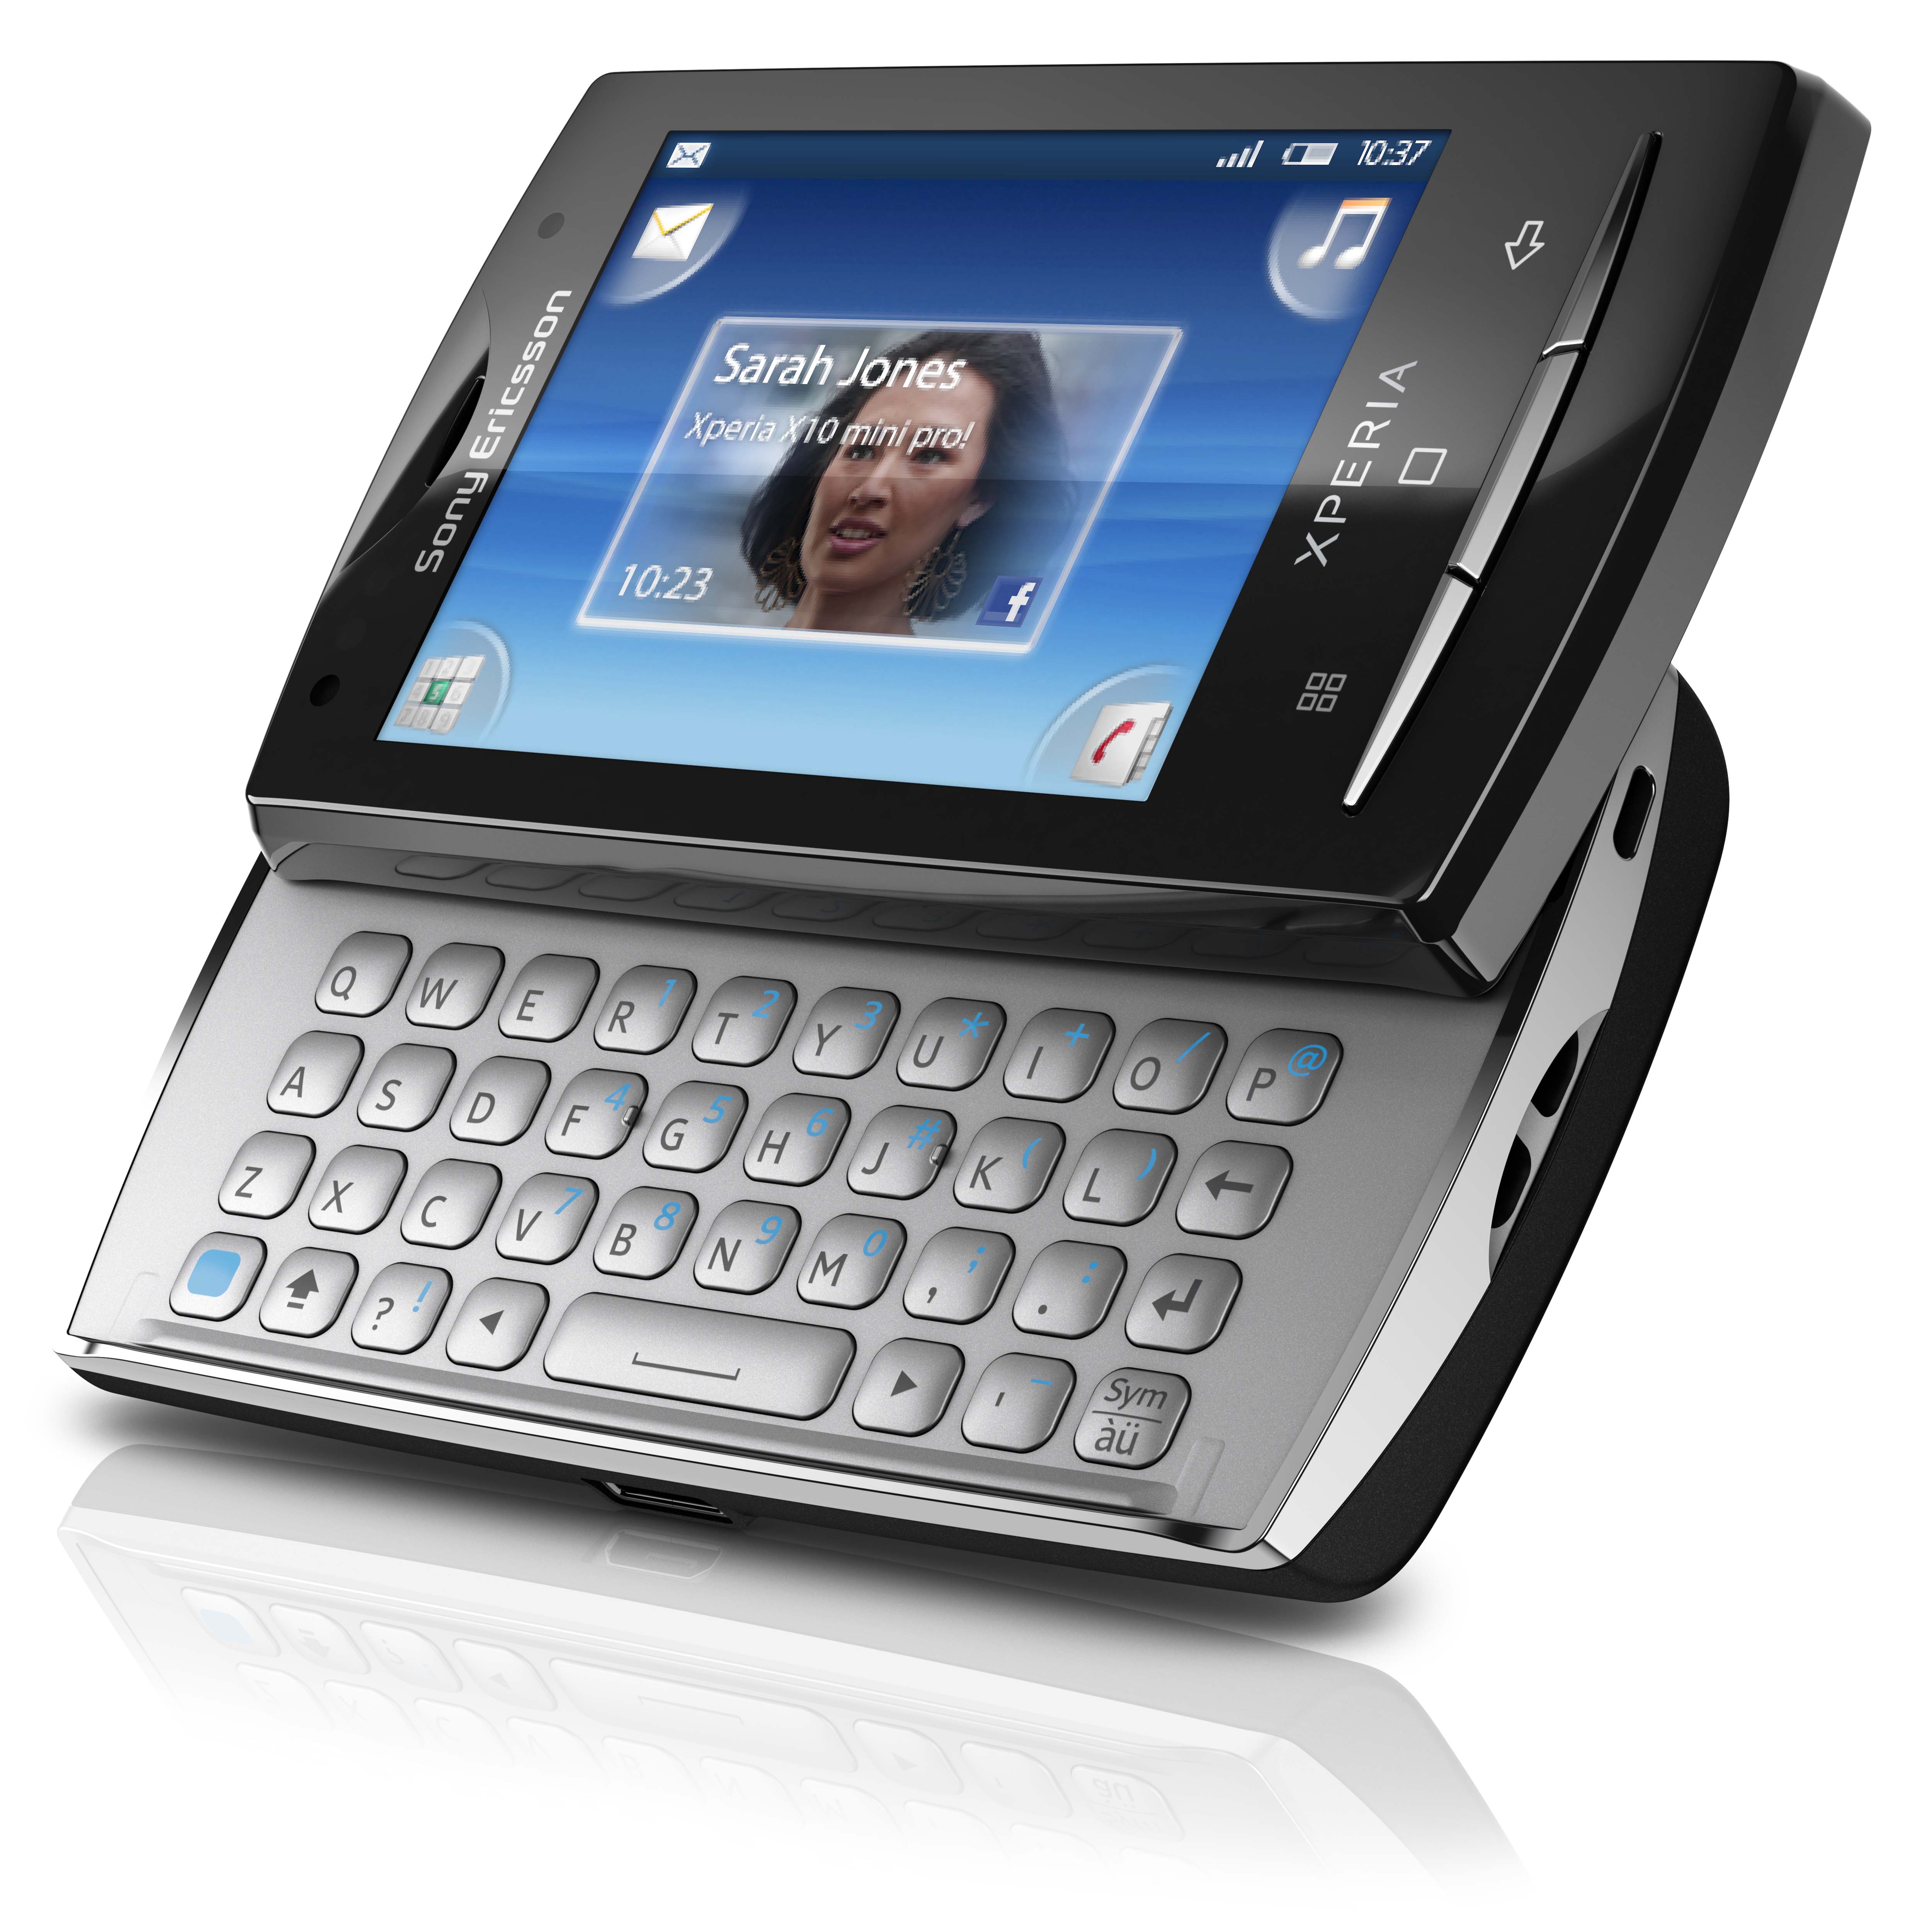 Sony-Ericsson Xperia X10 mini ringtones free download.